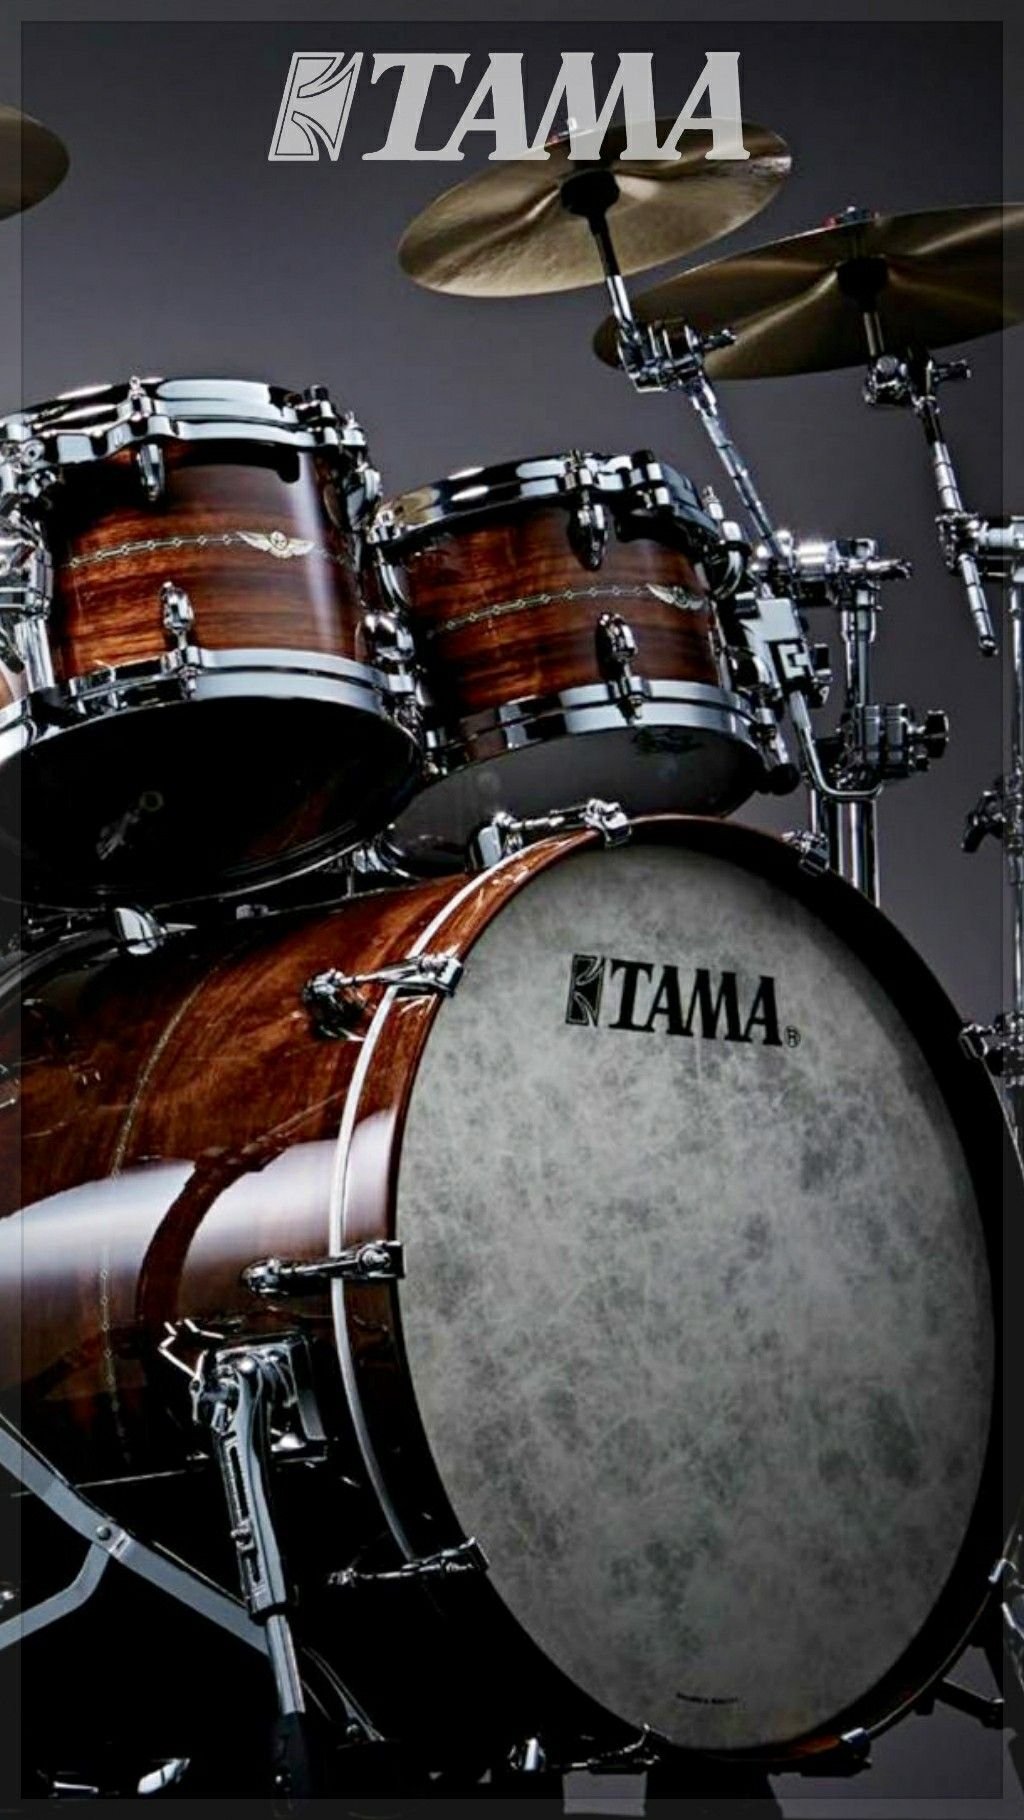 Tama drums Wallpaper Download